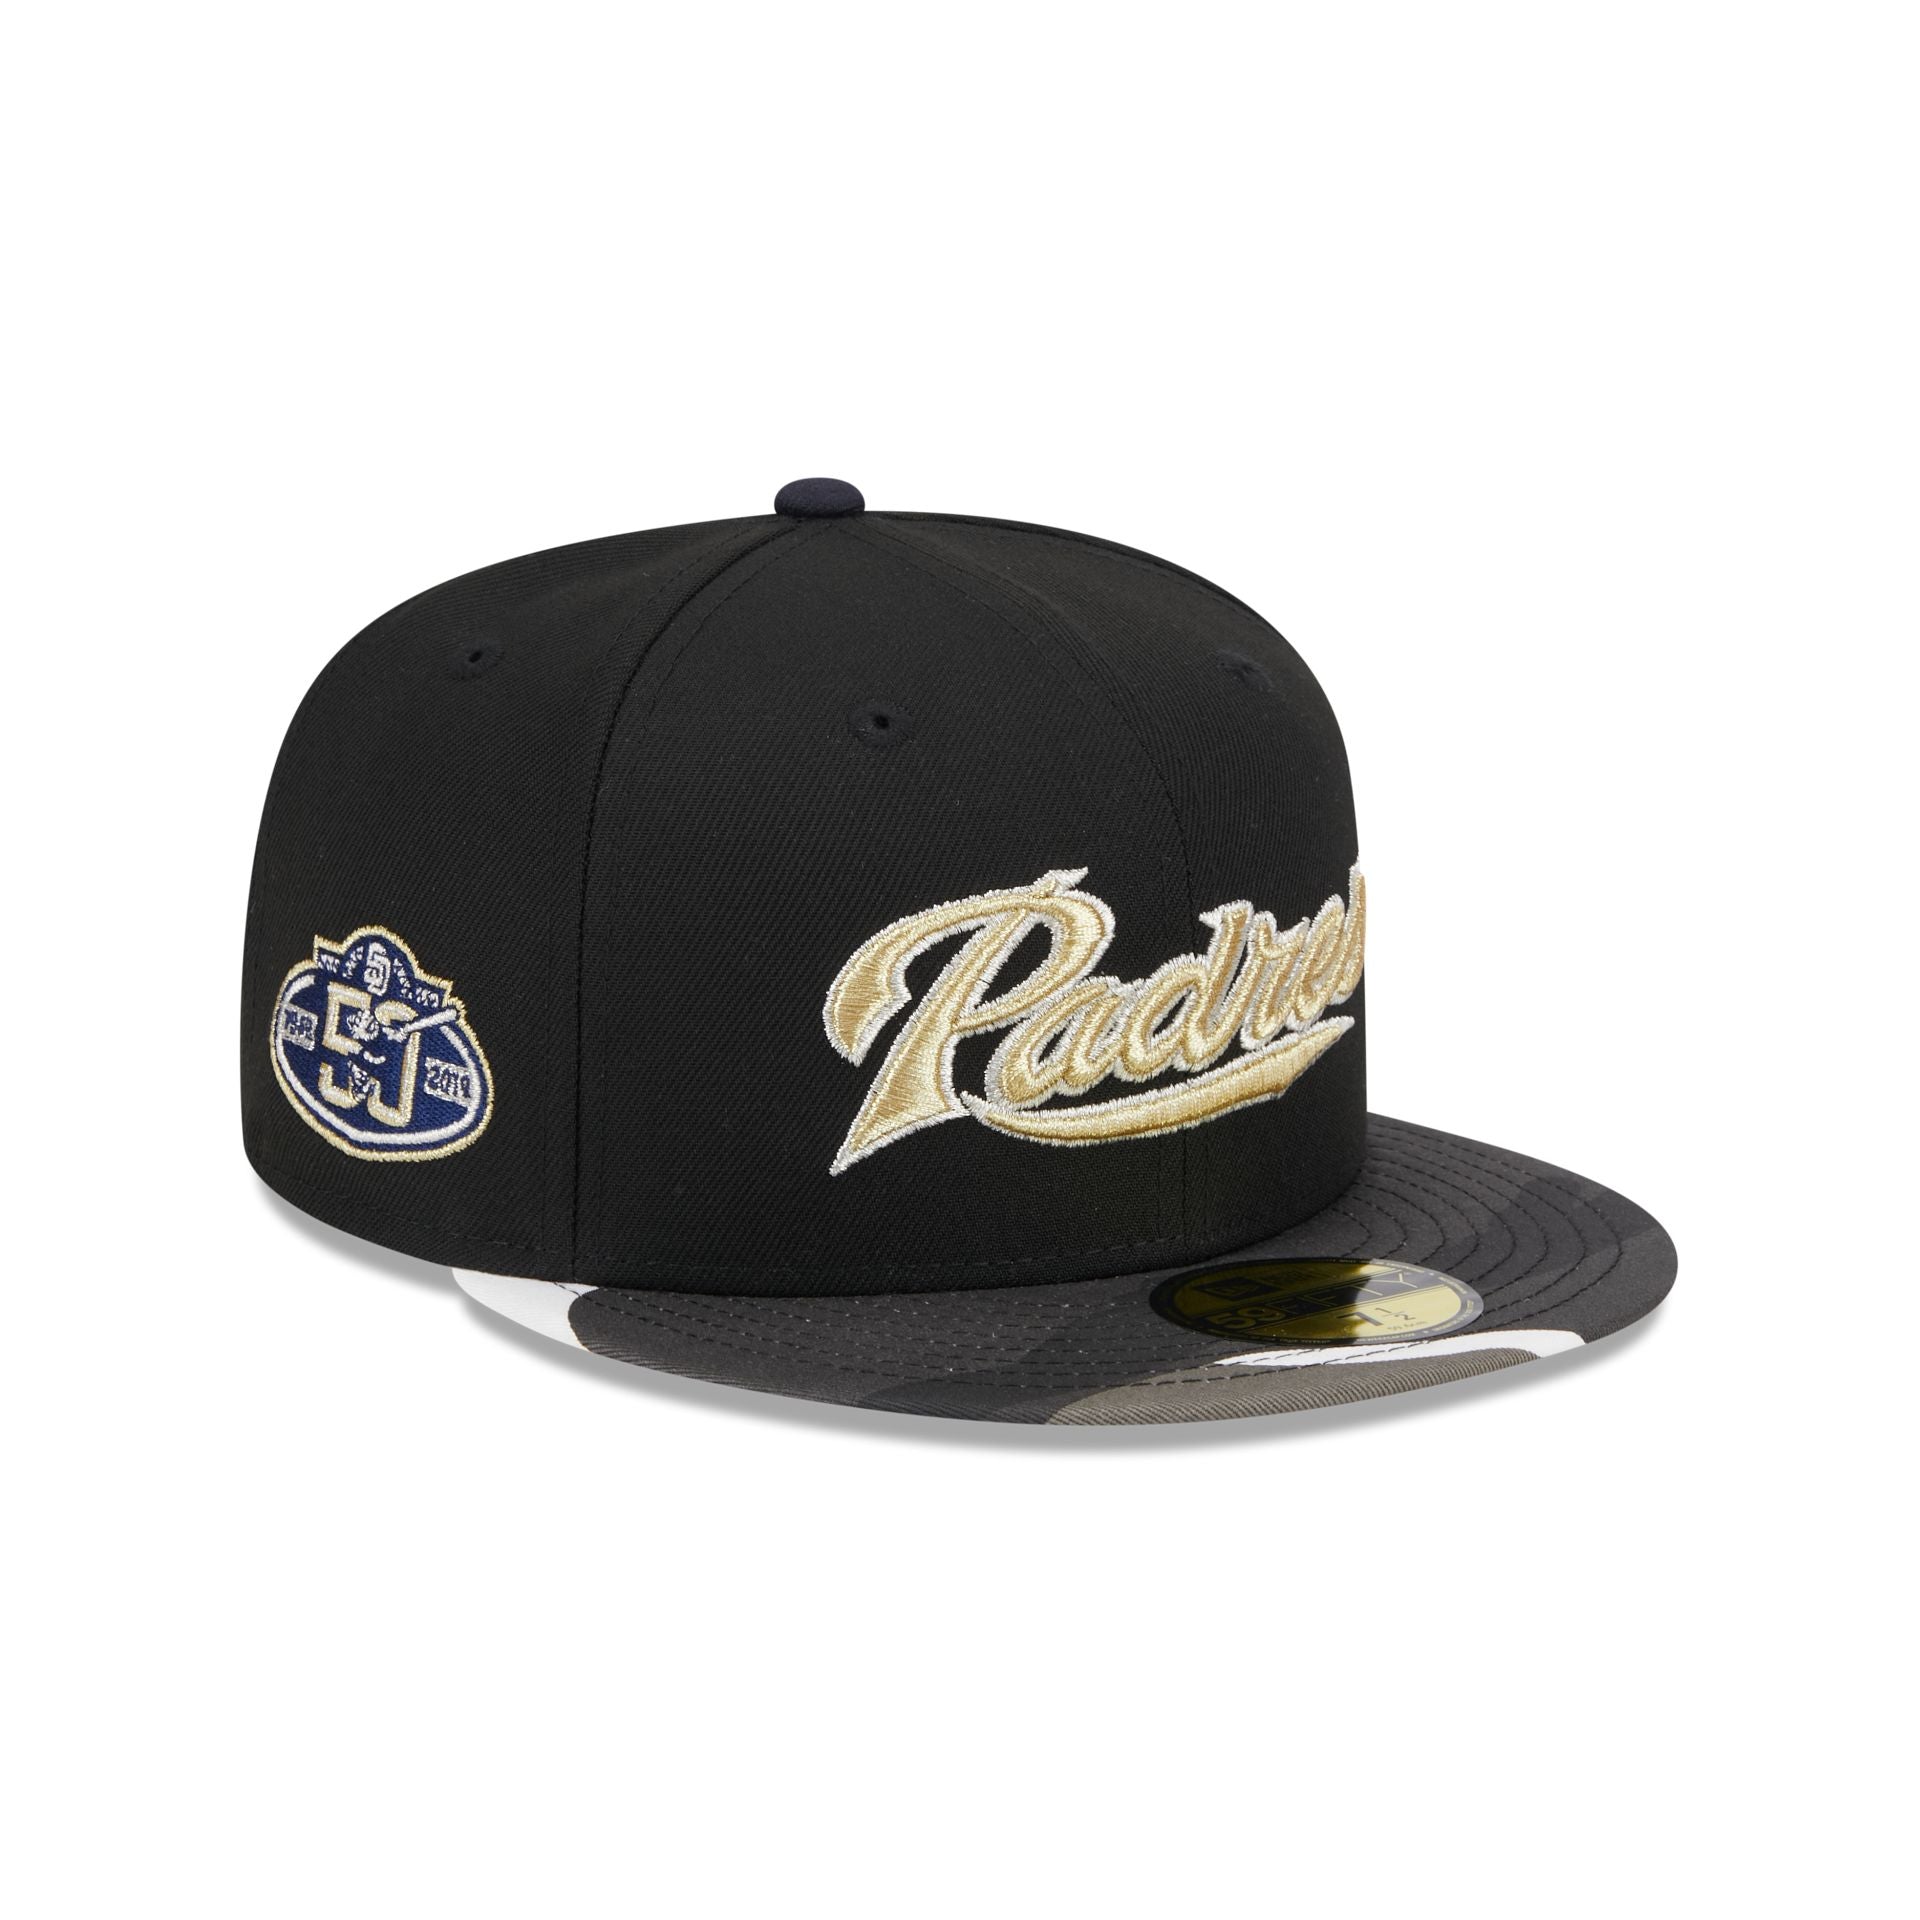 Atlanta Braves New Era Metallic Camo 59FIFTY Fitted Hat - Black